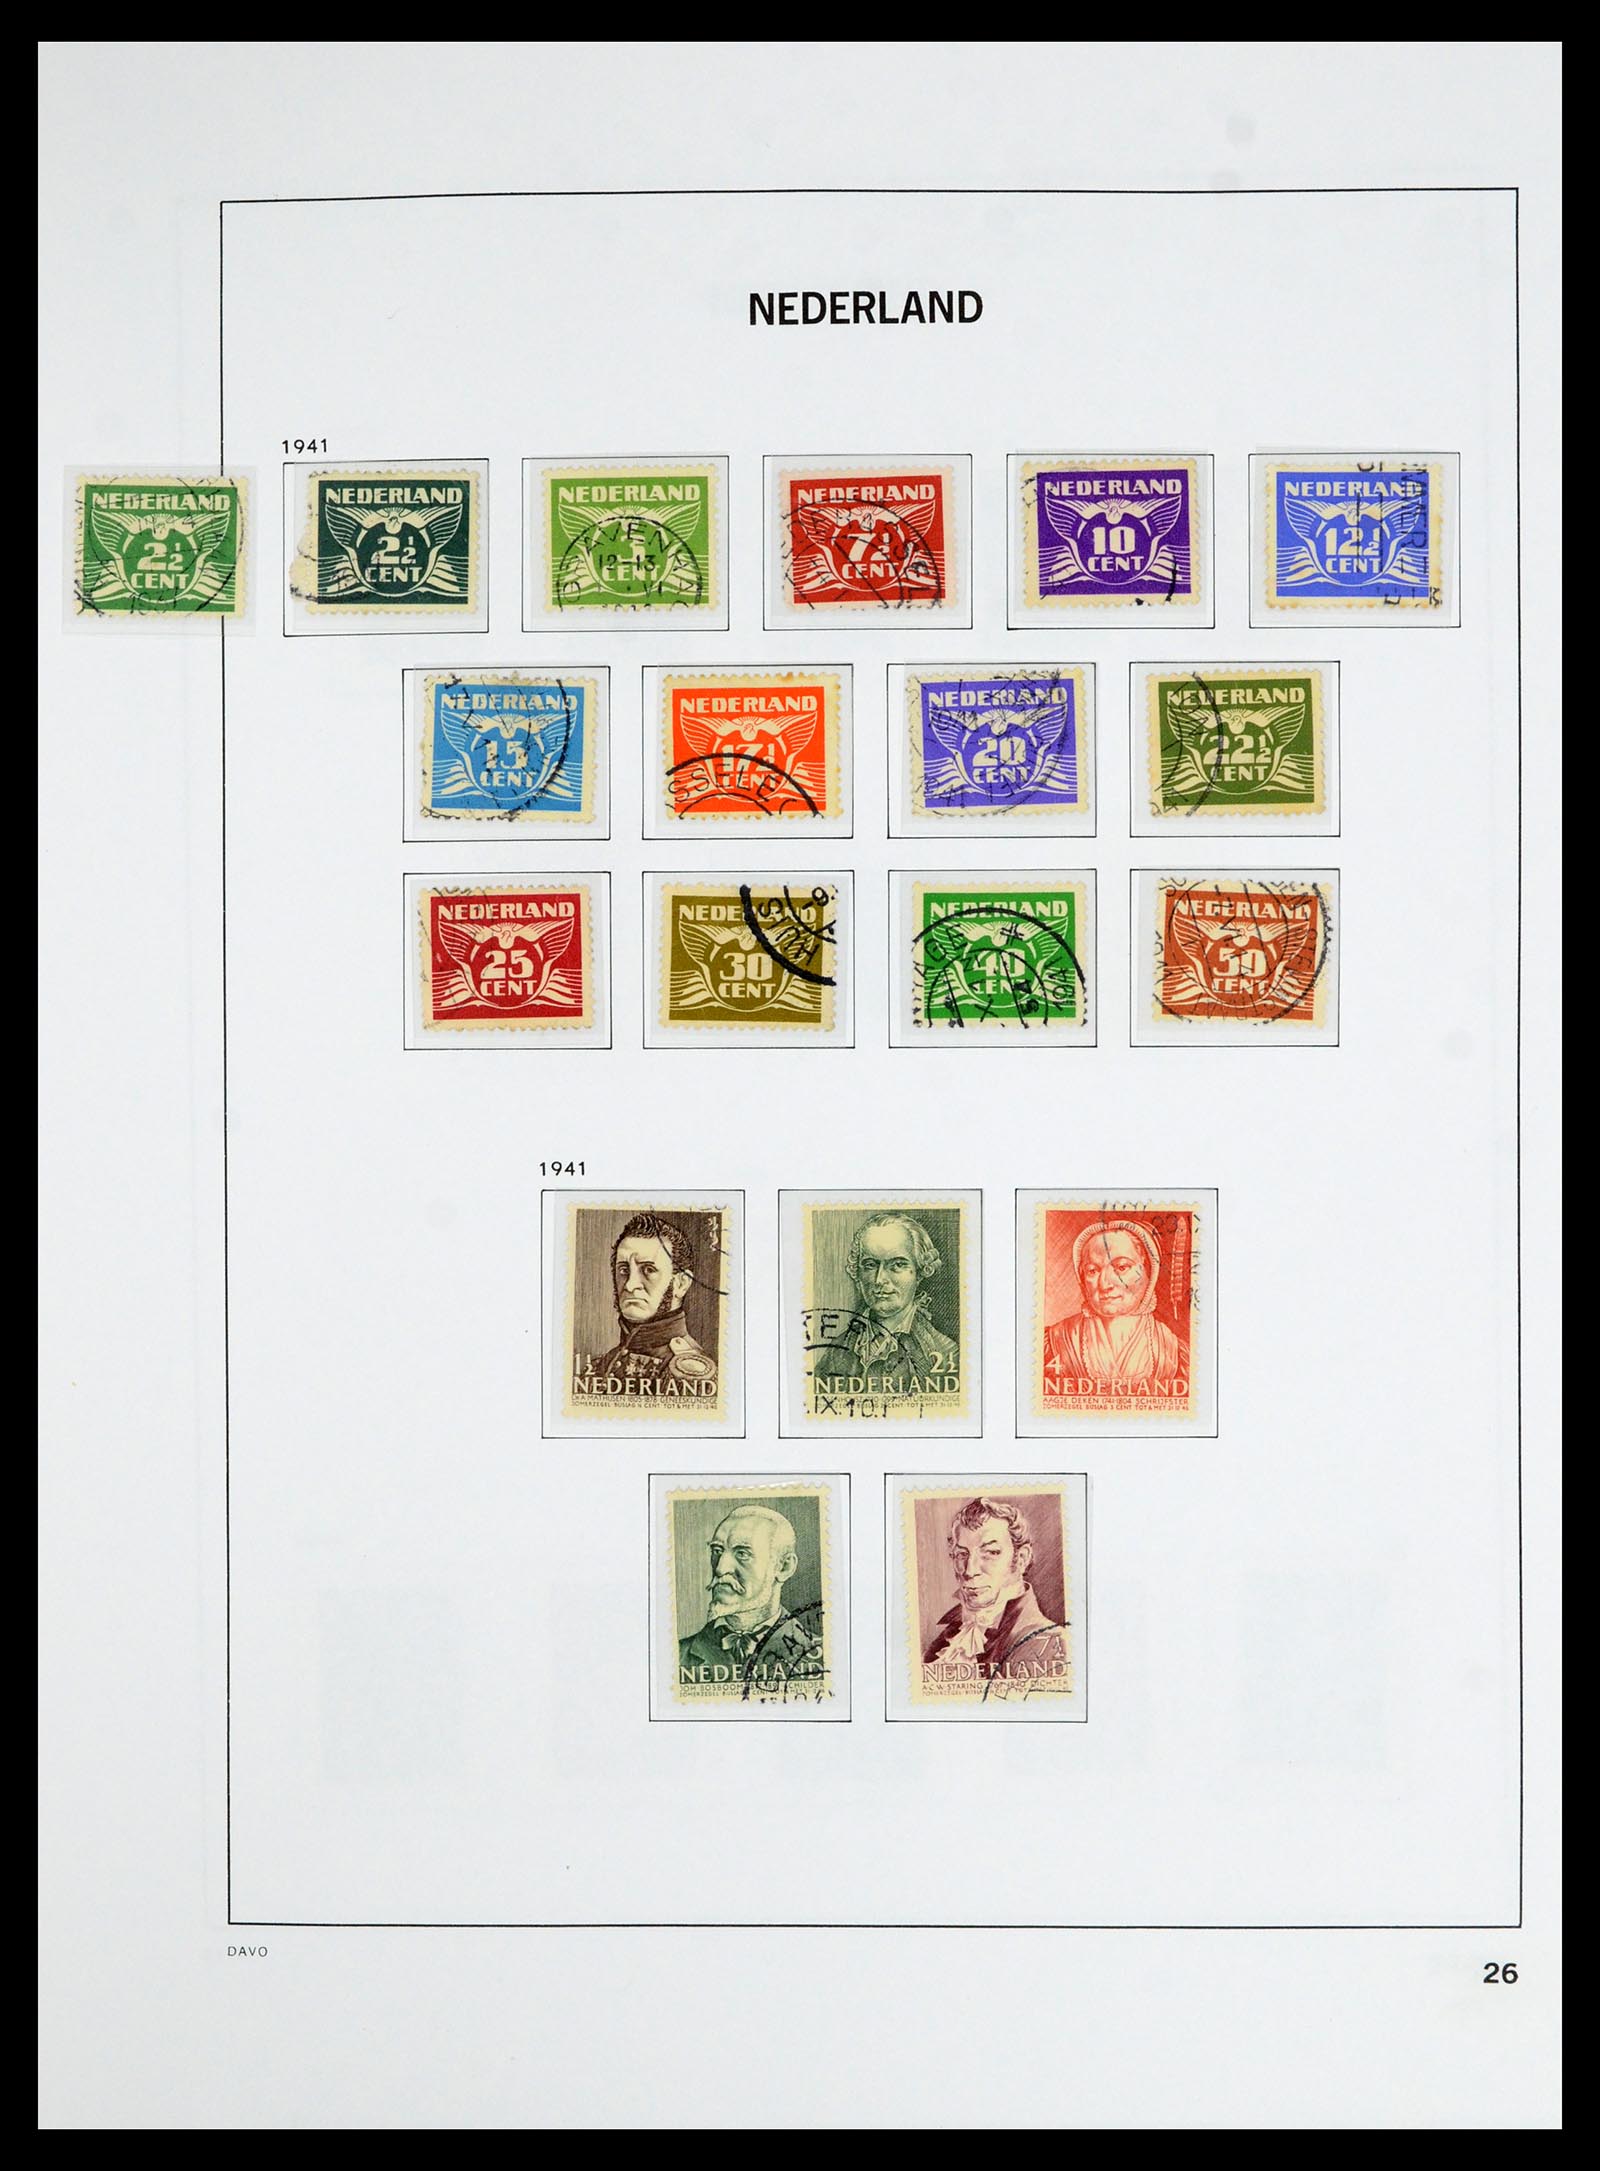 36629 026 - Stamp collection 36629 Nederland 1852-1989.